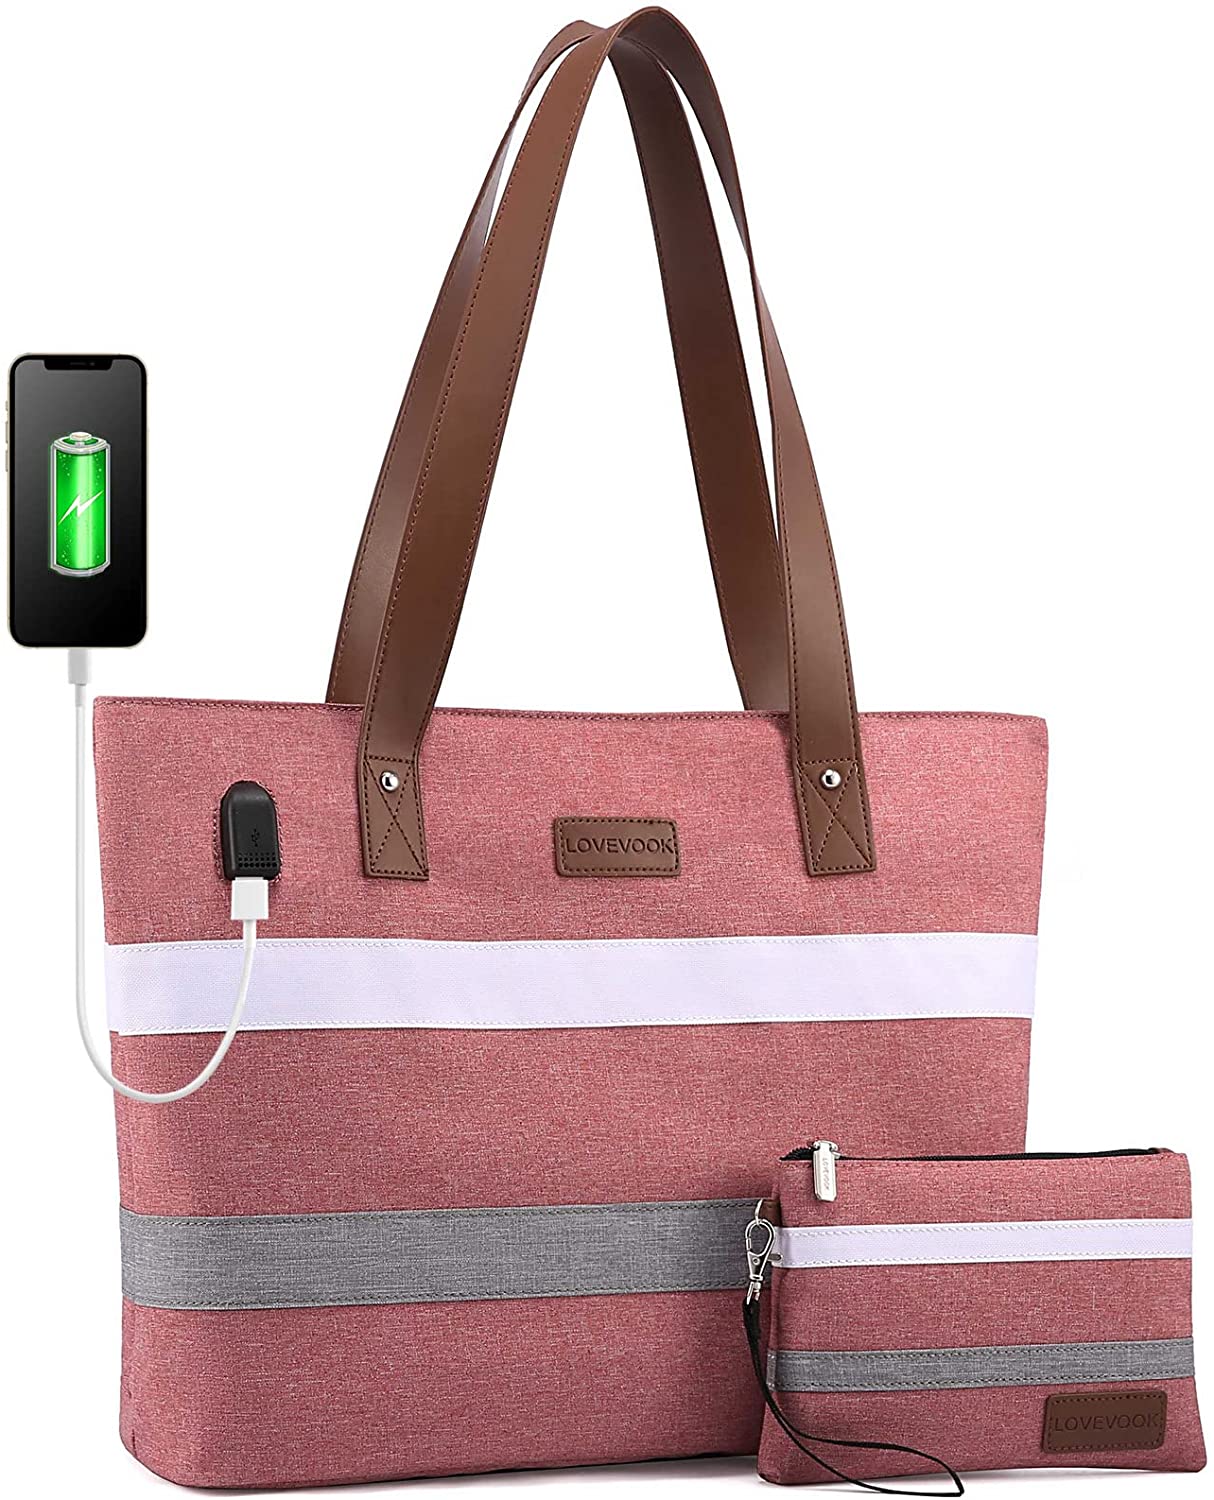 Laptop Shoulder Work Tote Bag for Women,Lightweight Casual School Bag Fits 15.6 In Laptop Handbag Purse 2pc/set